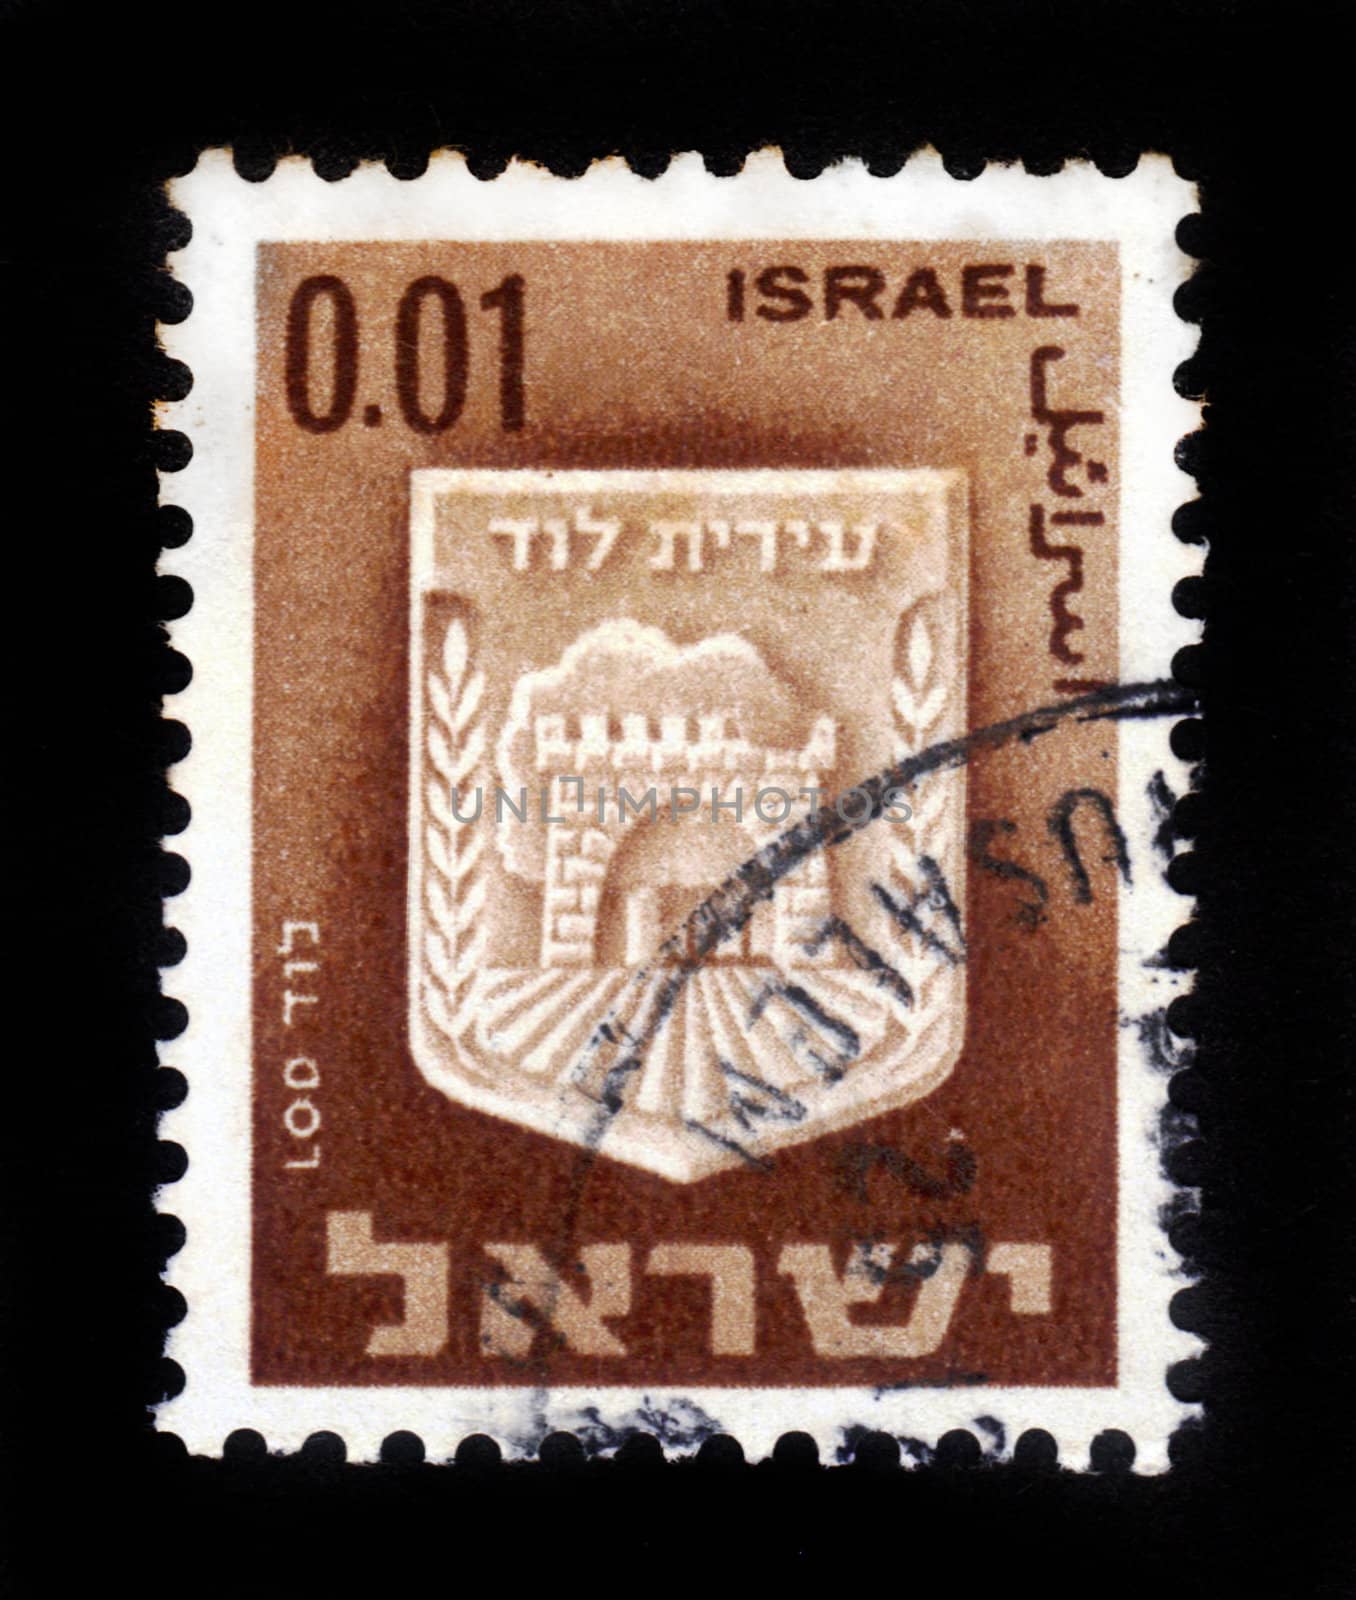 ISRAEL - CIRCA 1960: A stamp printed in Israel, shows coat of arms of Lod,  Israel, series , circa 1960